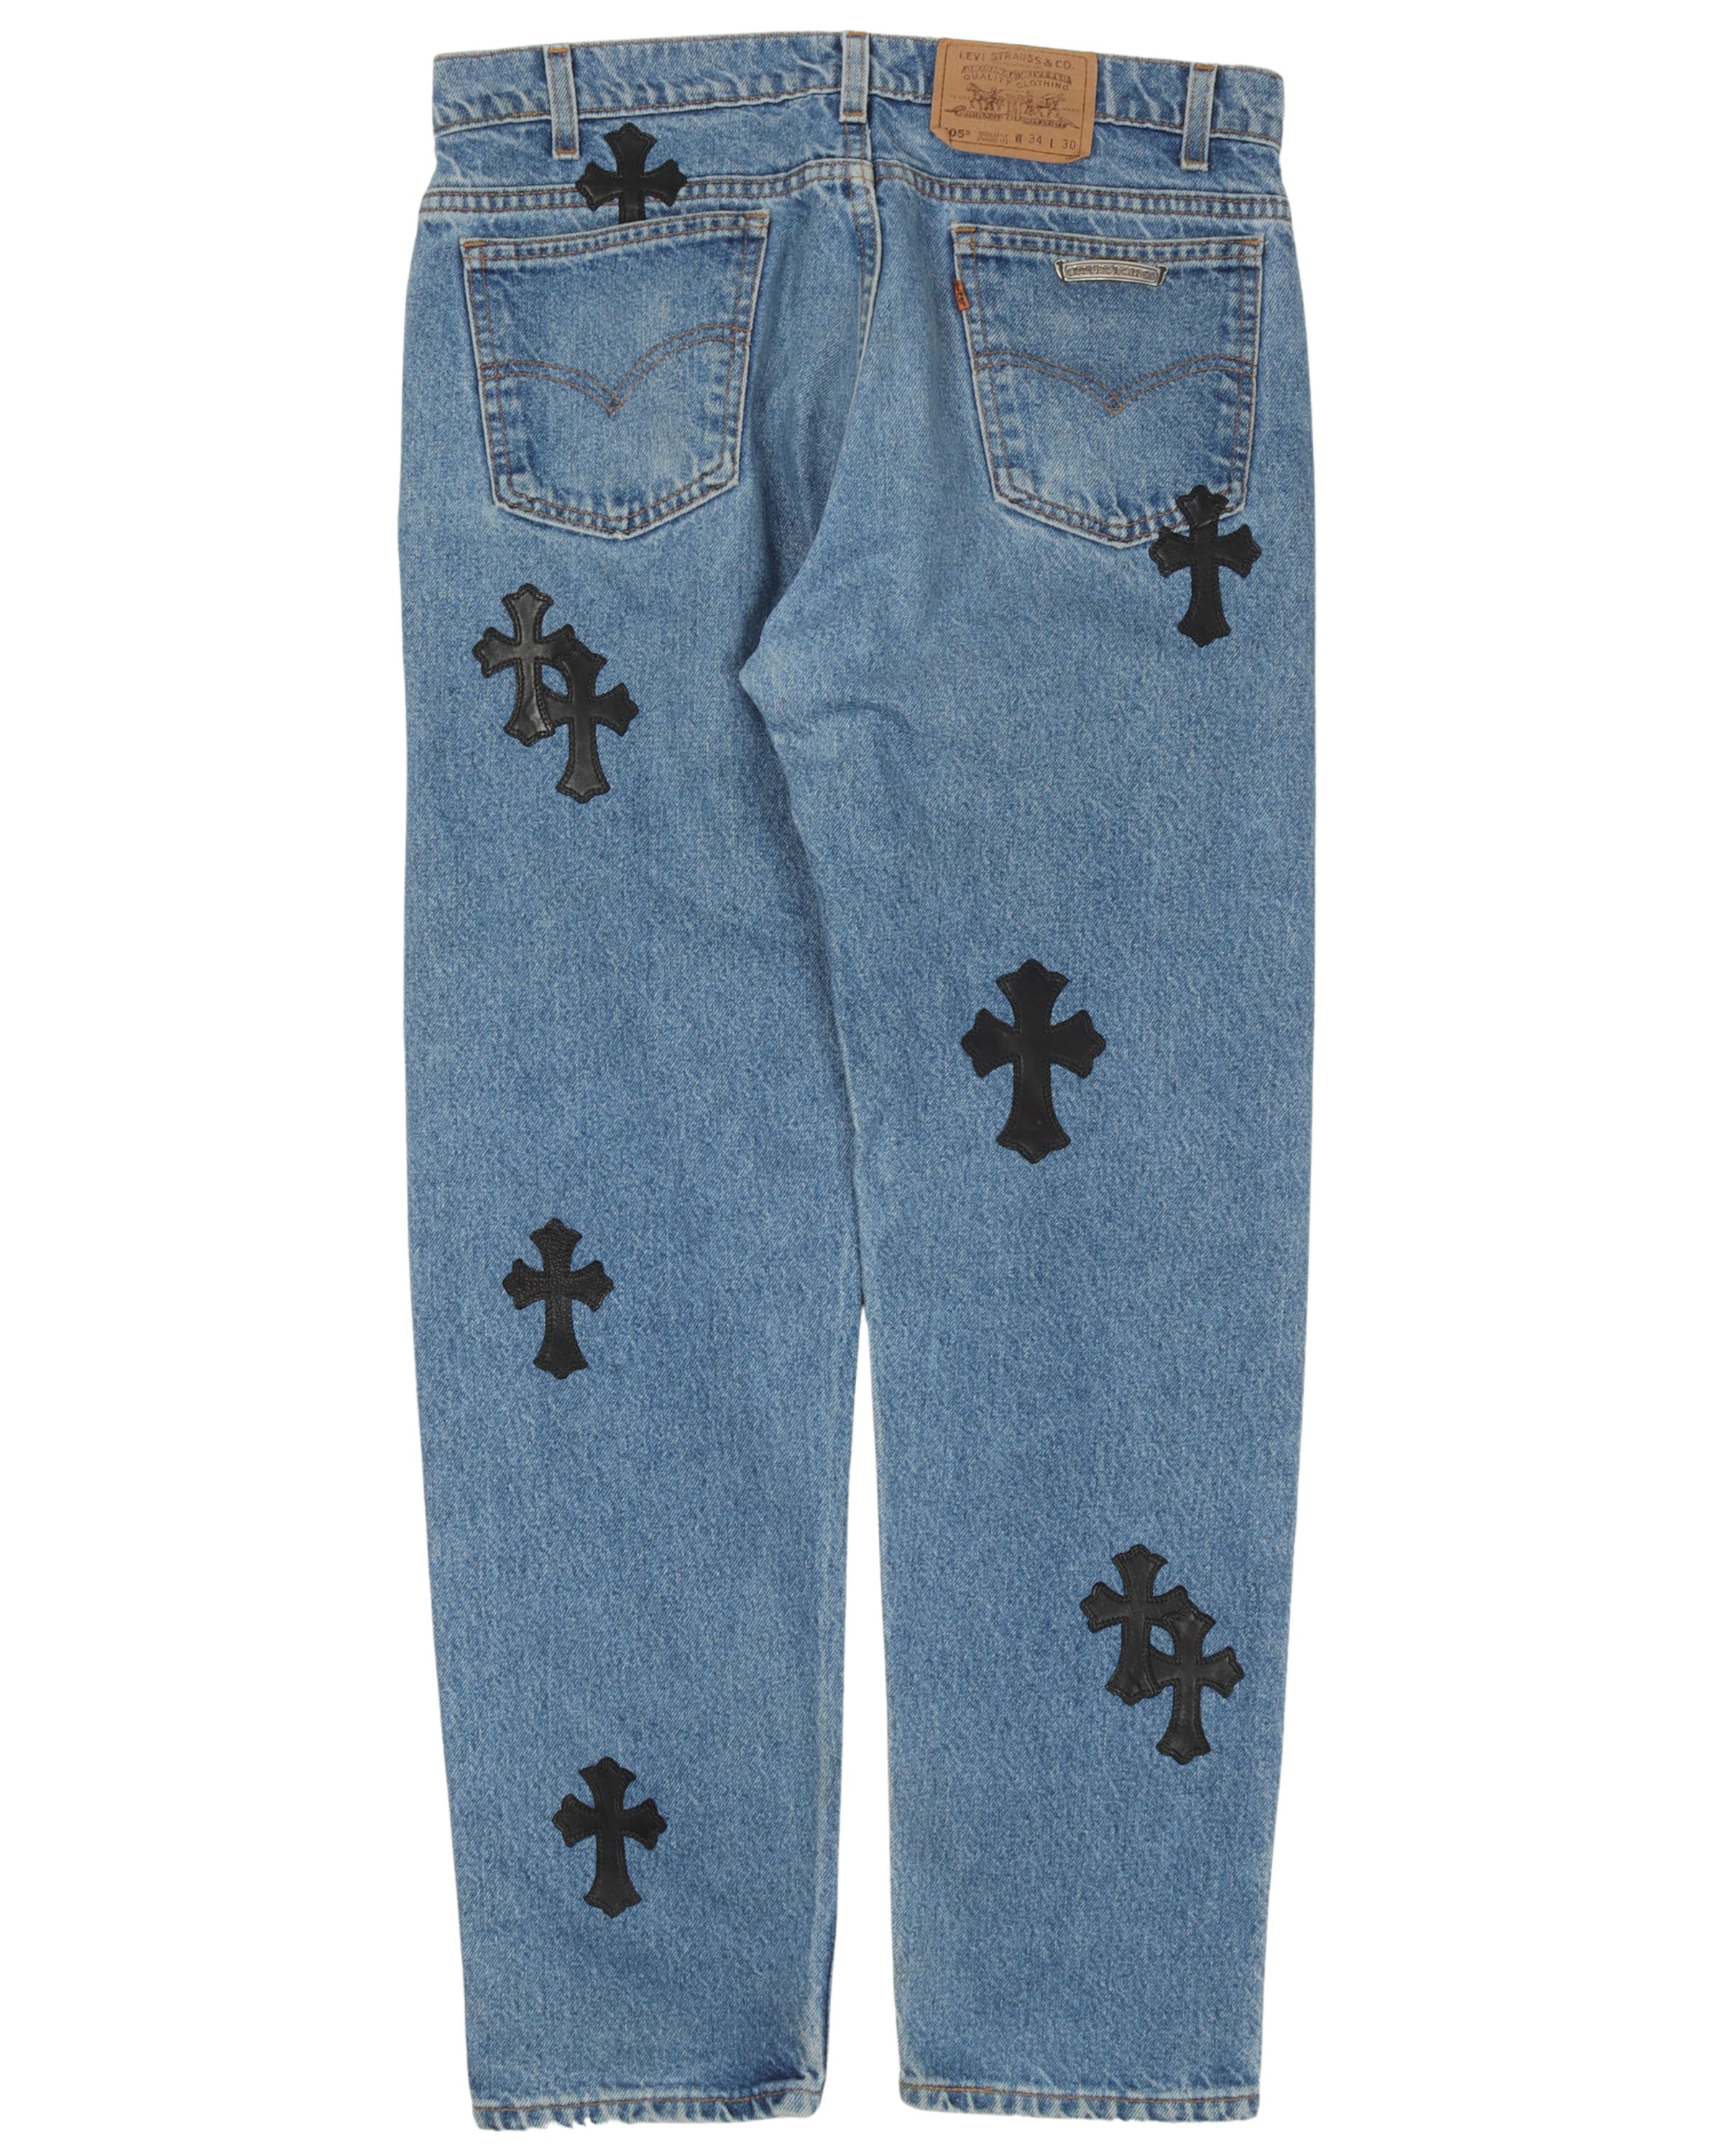 Levi's Leather Cross Jeans